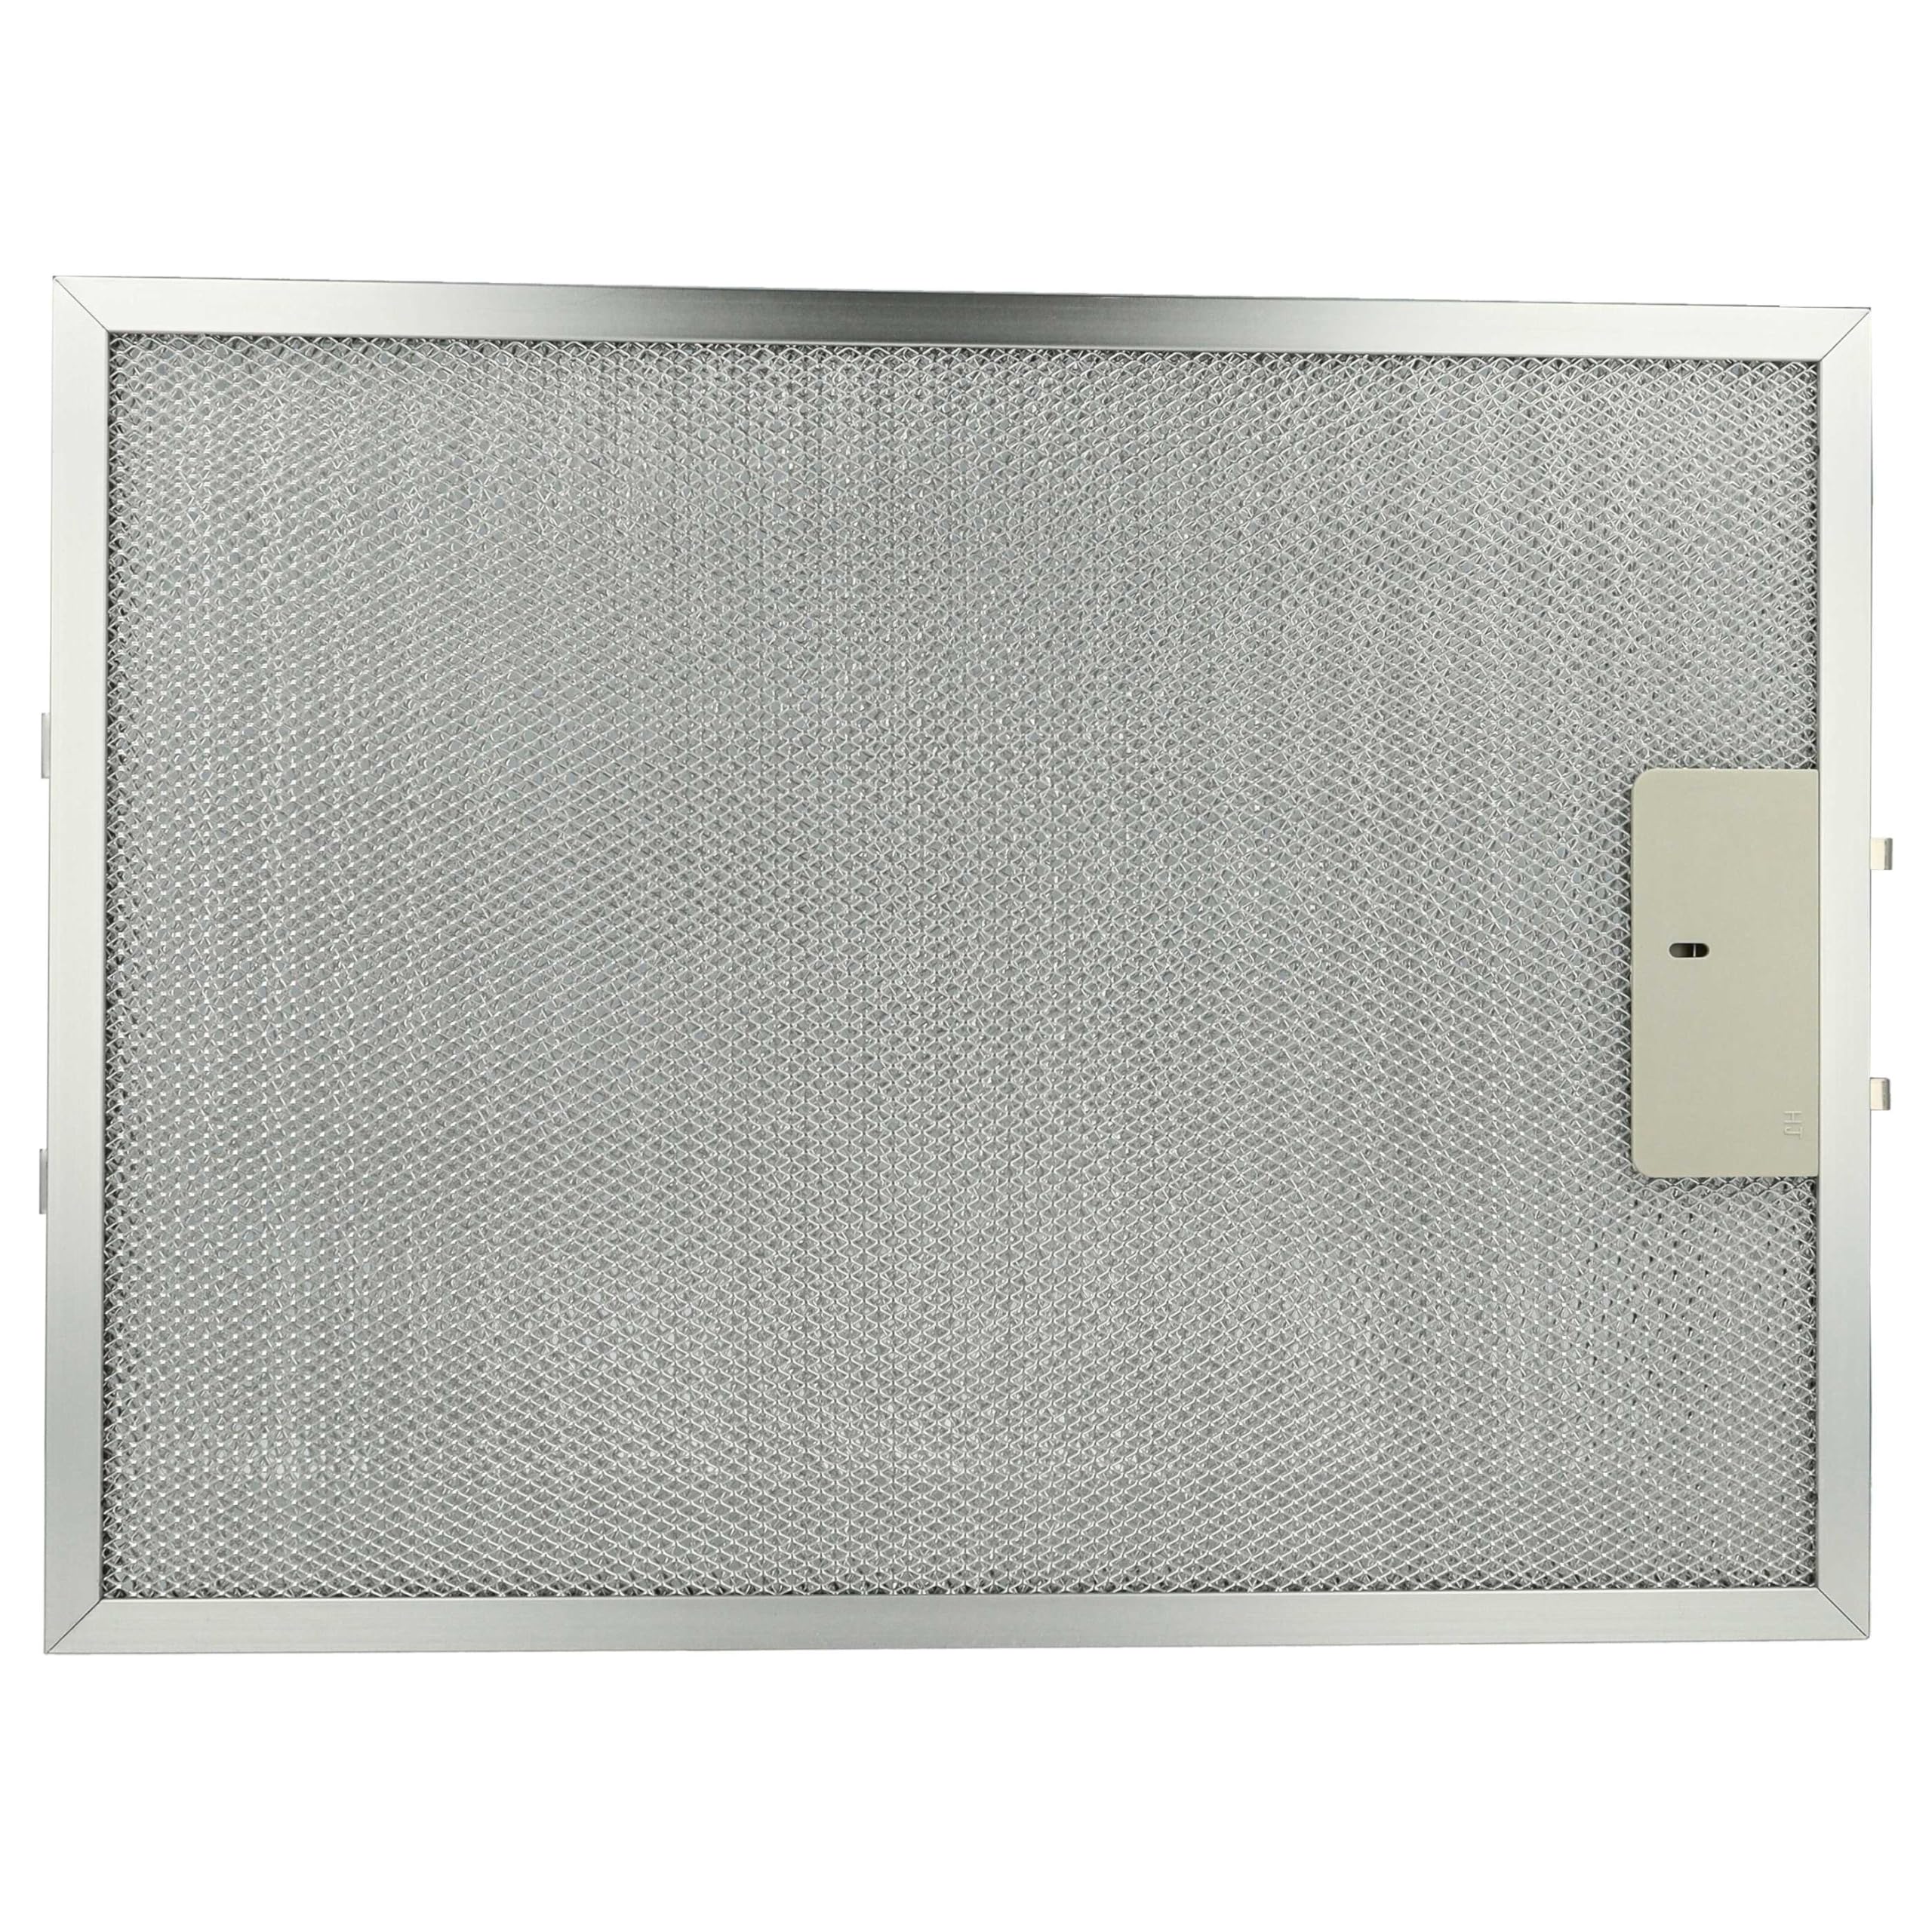 vhbw Filter Metallfettfilter Dauerfilter kompatibel mit AEG DU 4361-M 94212274701, DU 4361-W 94212274801 Dunstabzugshaube - 38 x 28,3 x 0,9 cm, Metall